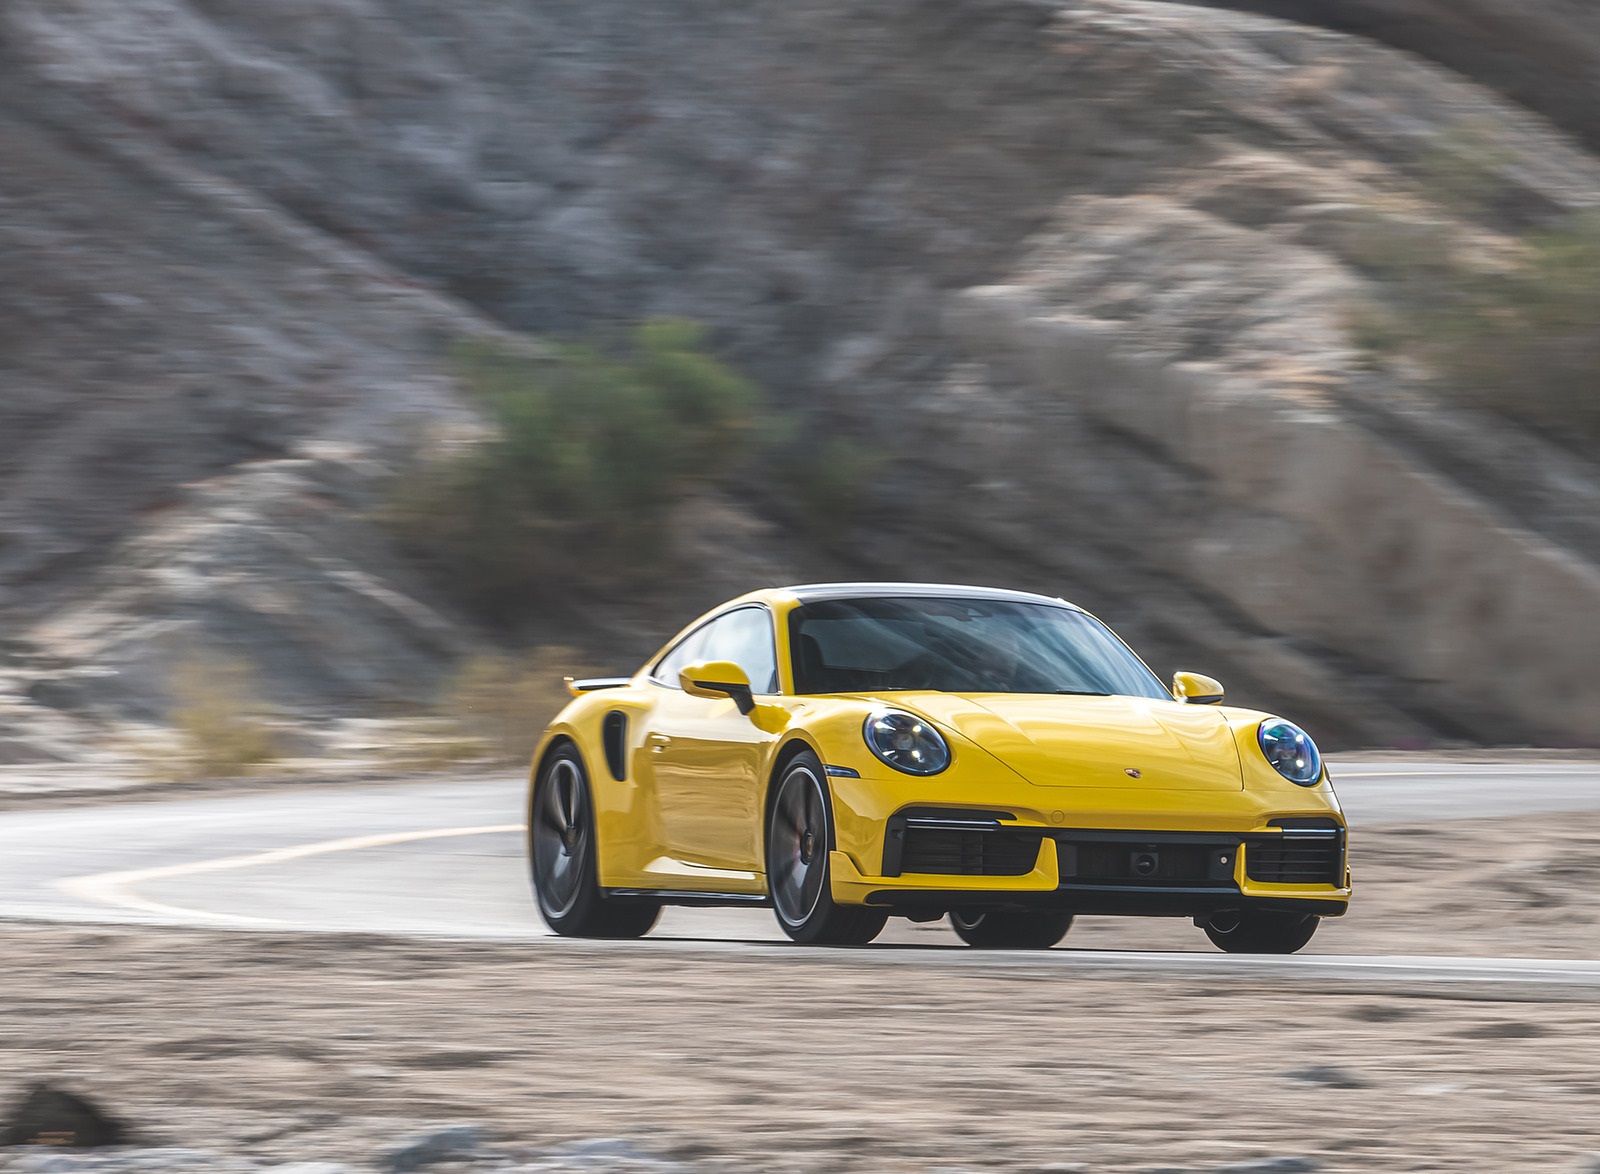 2021 Porsche 911 Turbo (Color: Racing Yellow; US-Spec) Front Three-Quarter Wallpapers  #141 of 225